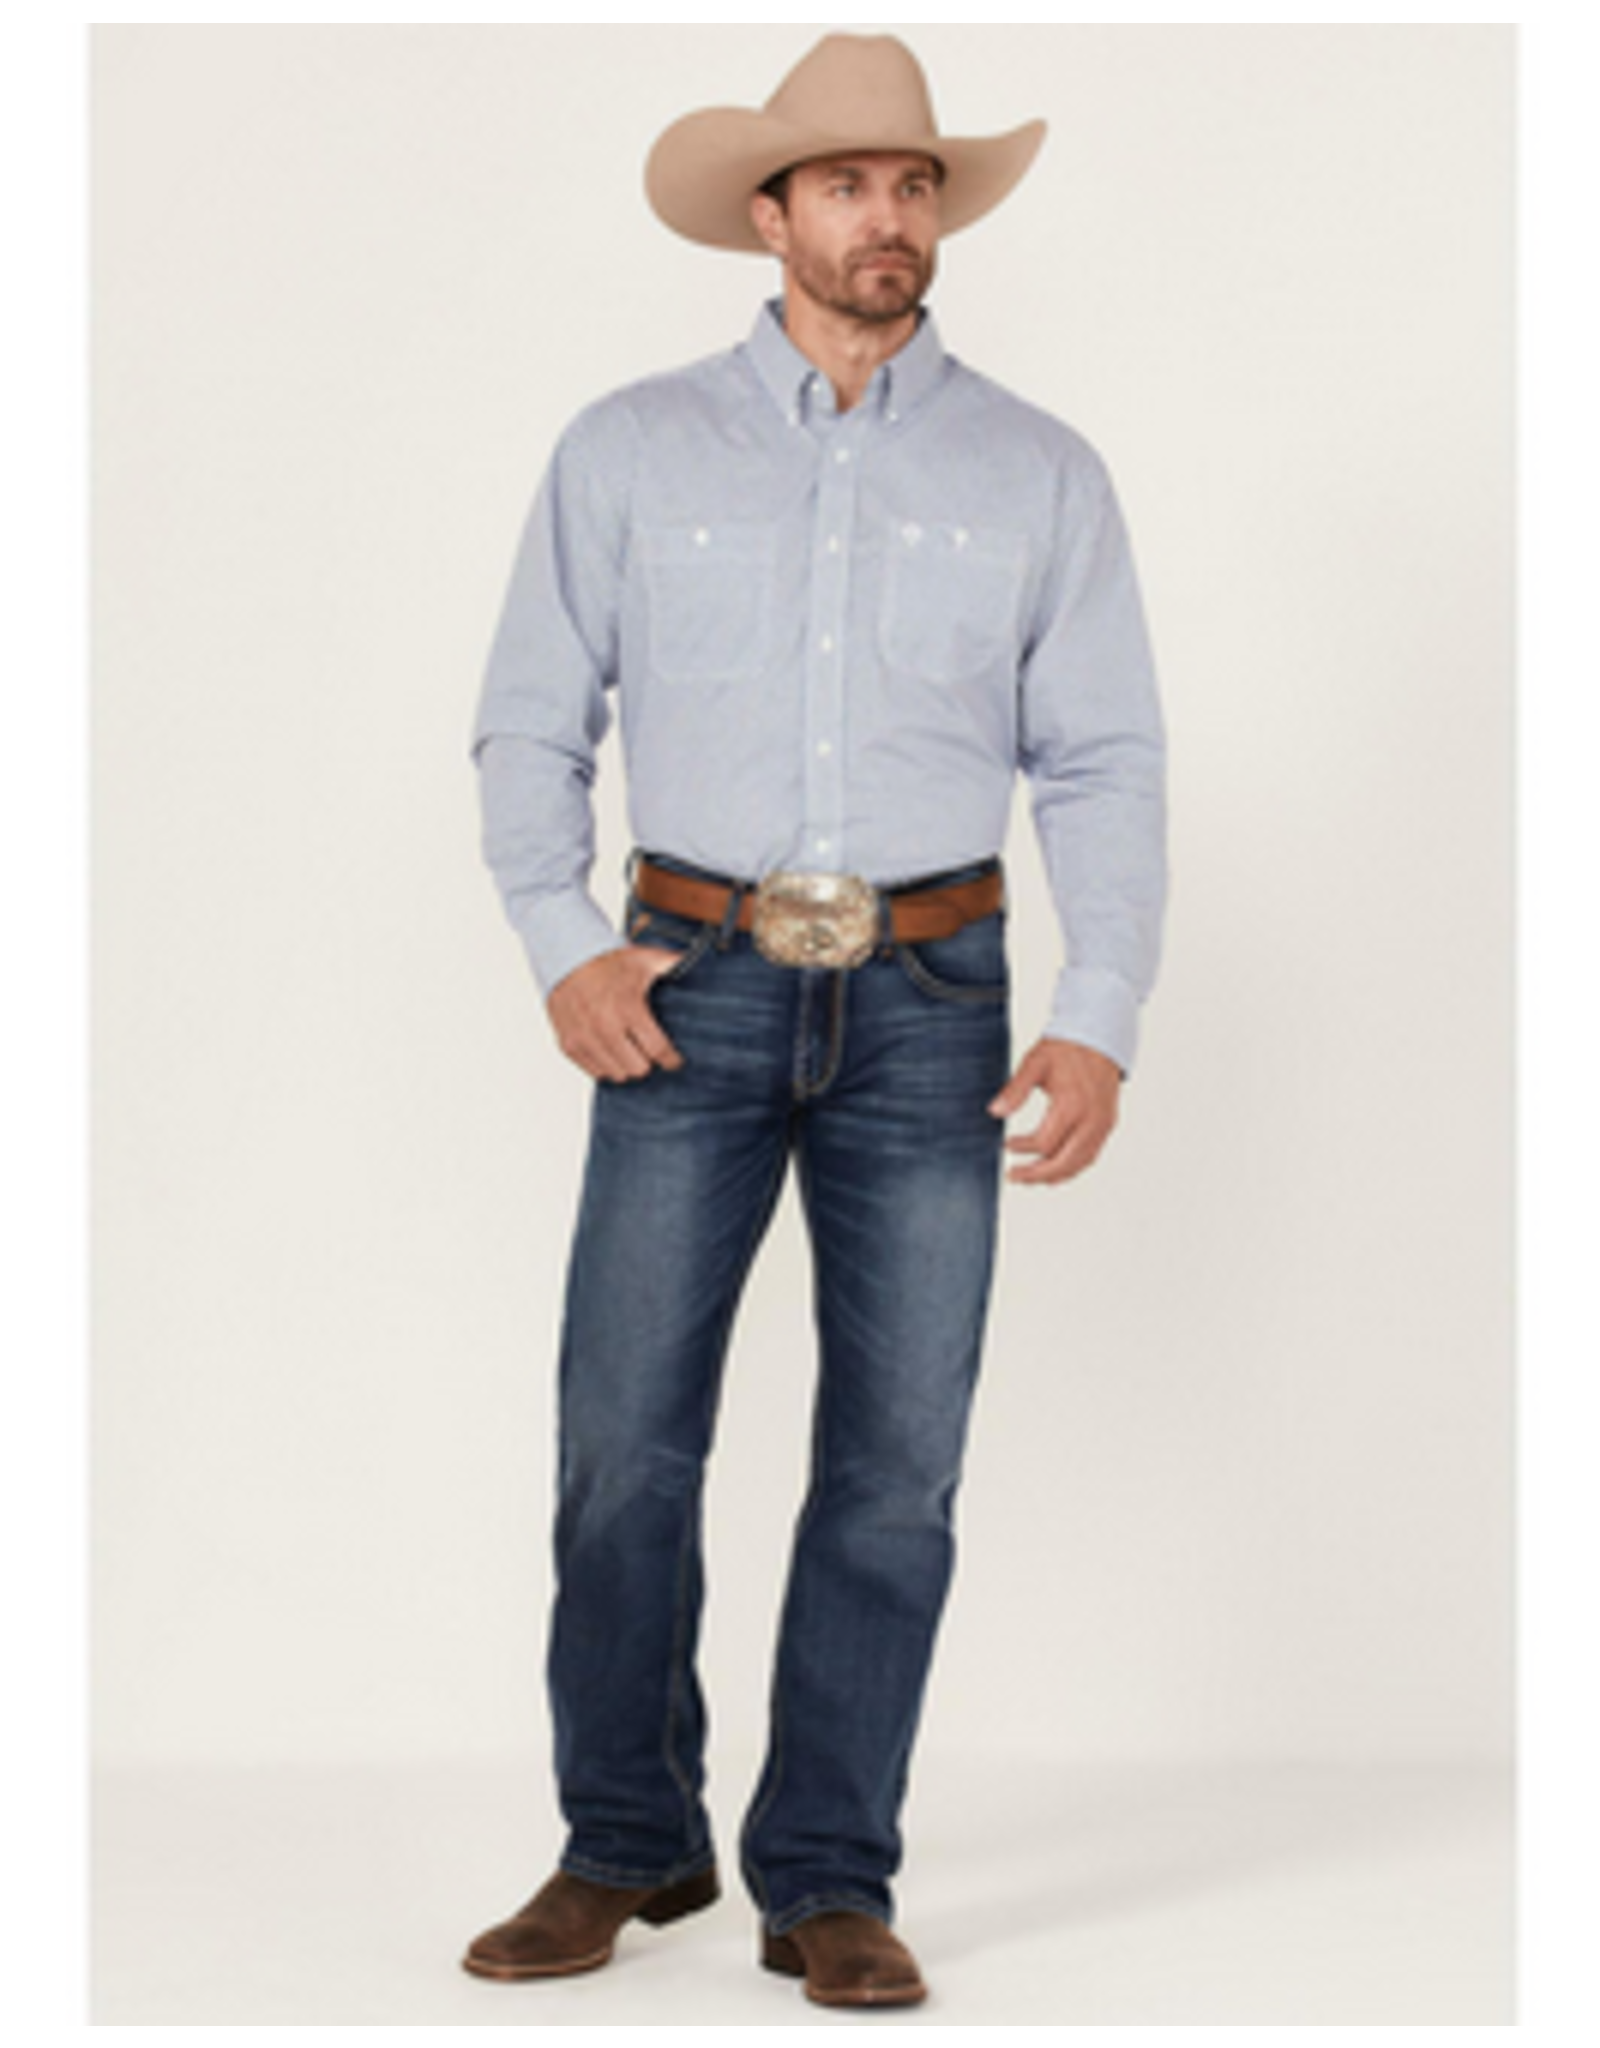 Wrangler - Men's George Strait Collection Long Sleeve Shirt - 112314984